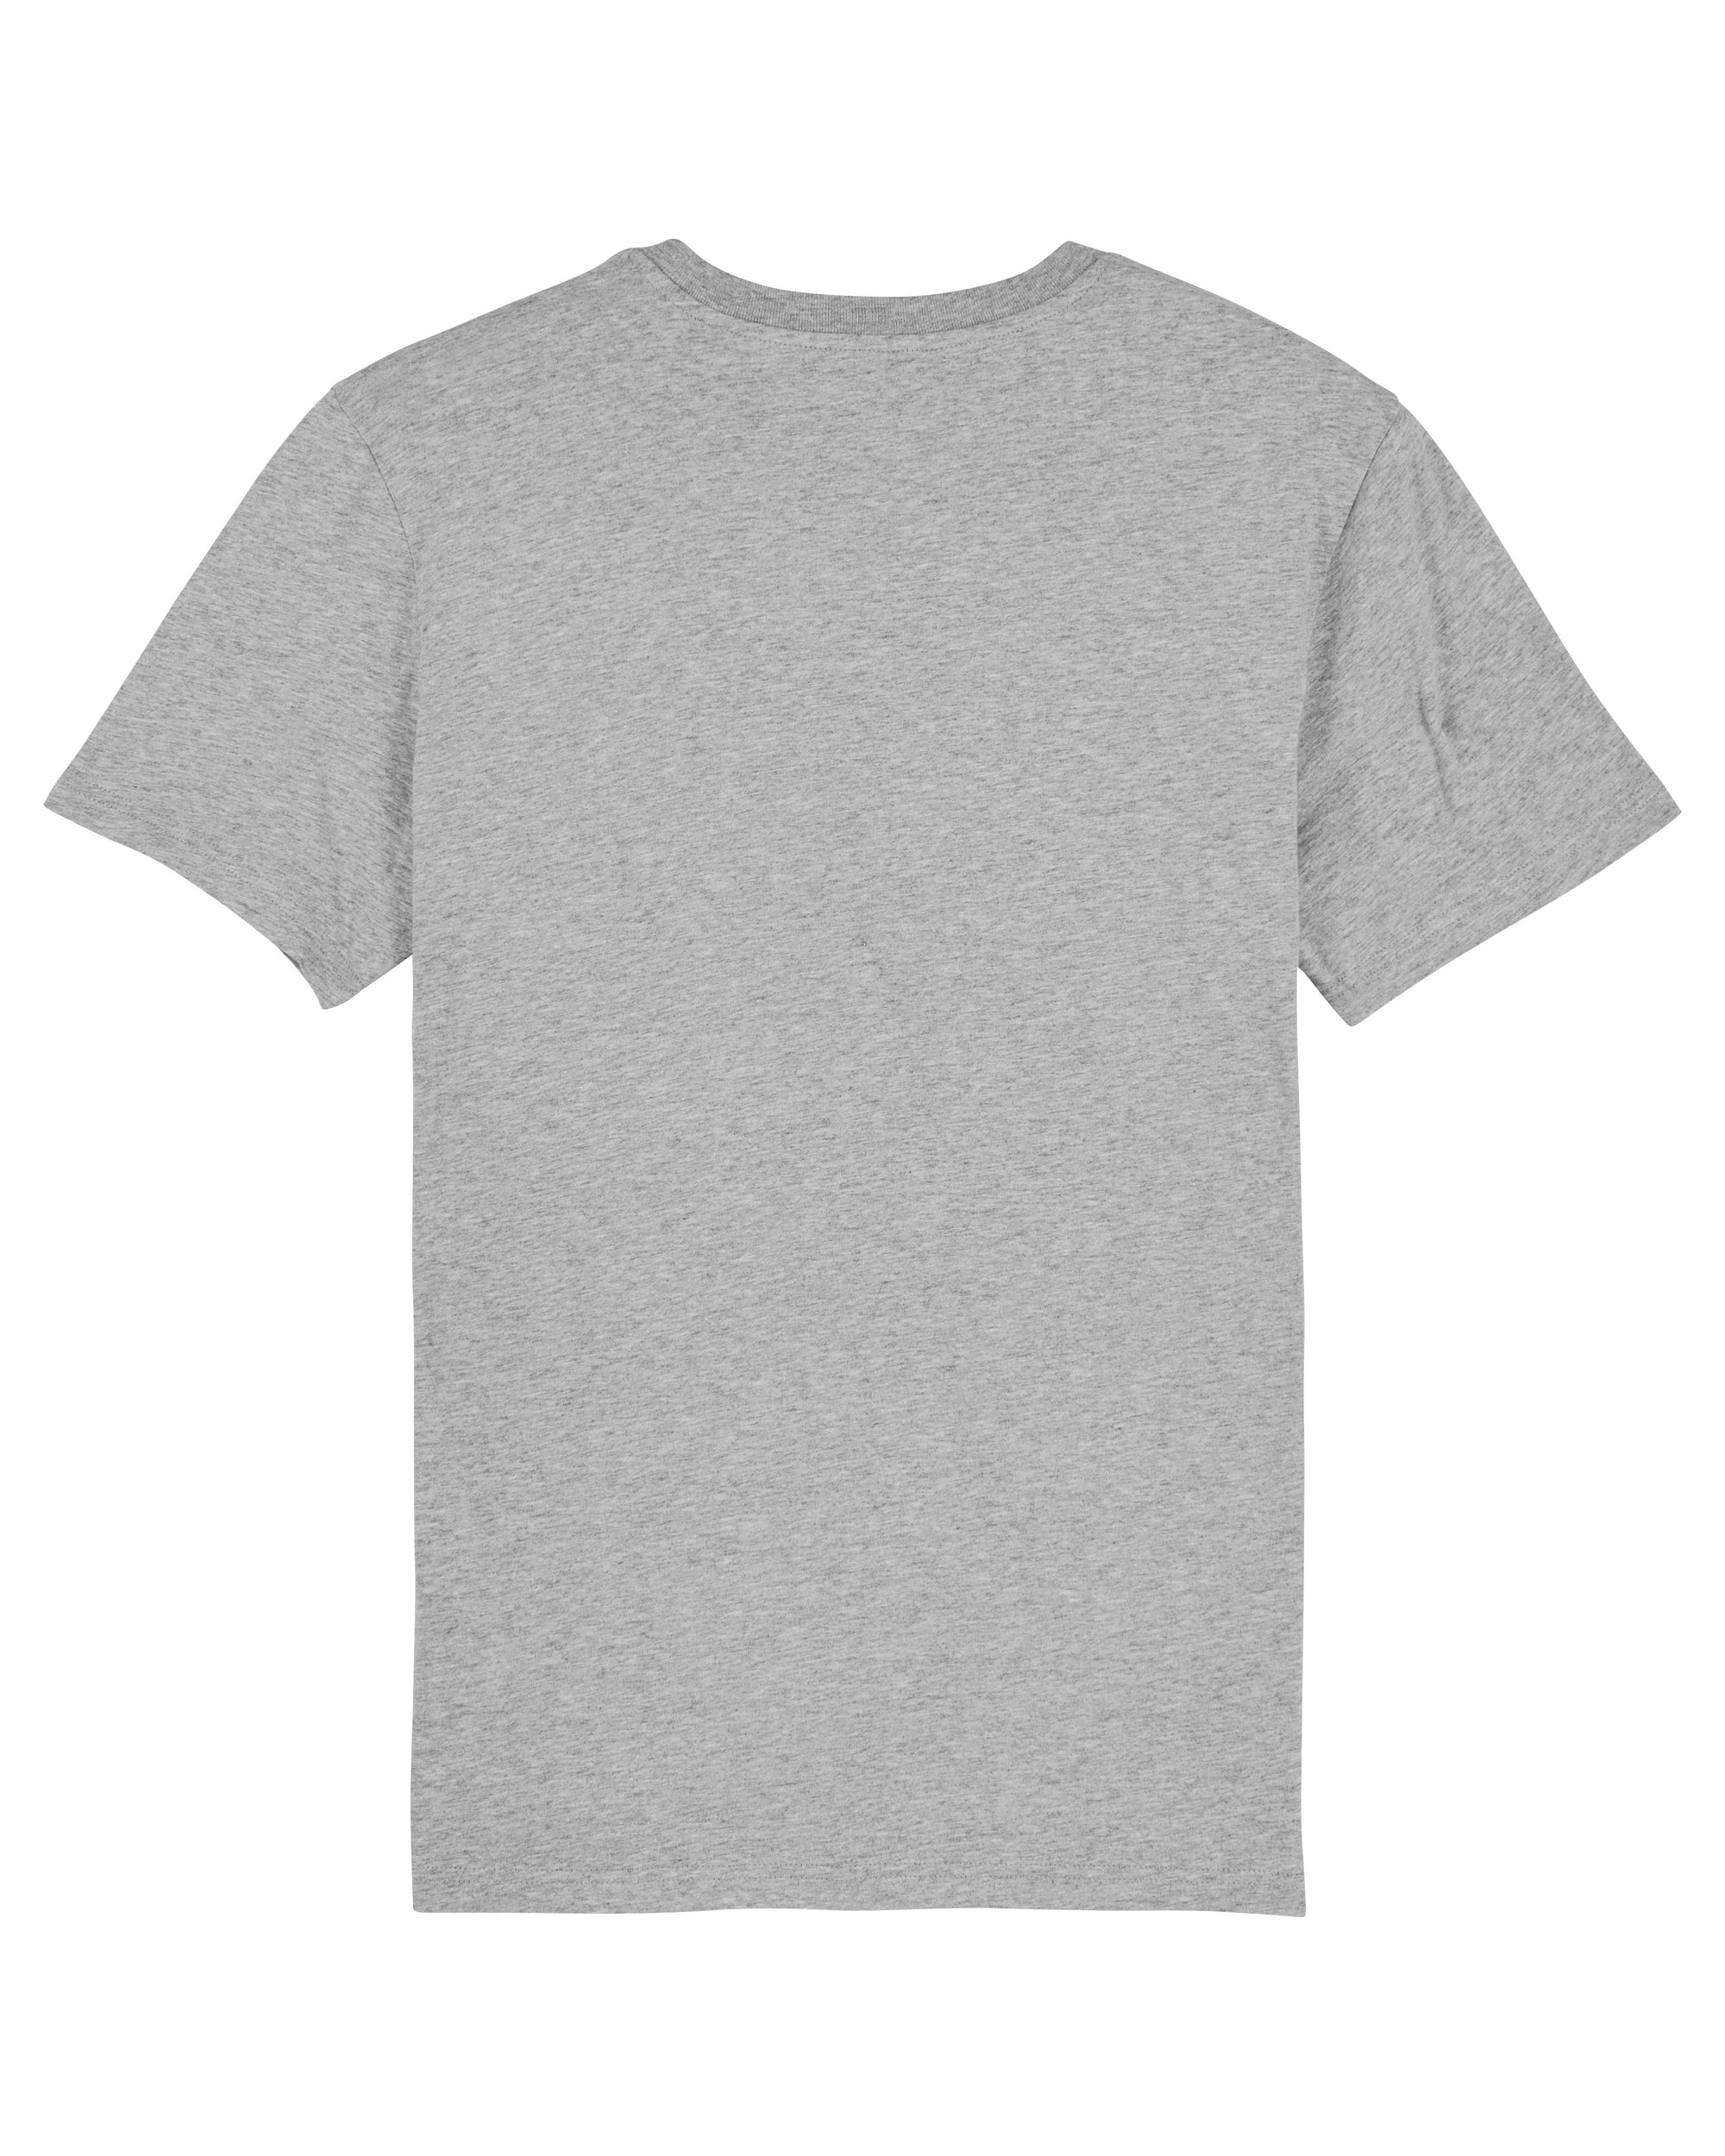 T-Shirt "Moin" Heather Grey/Neonblau